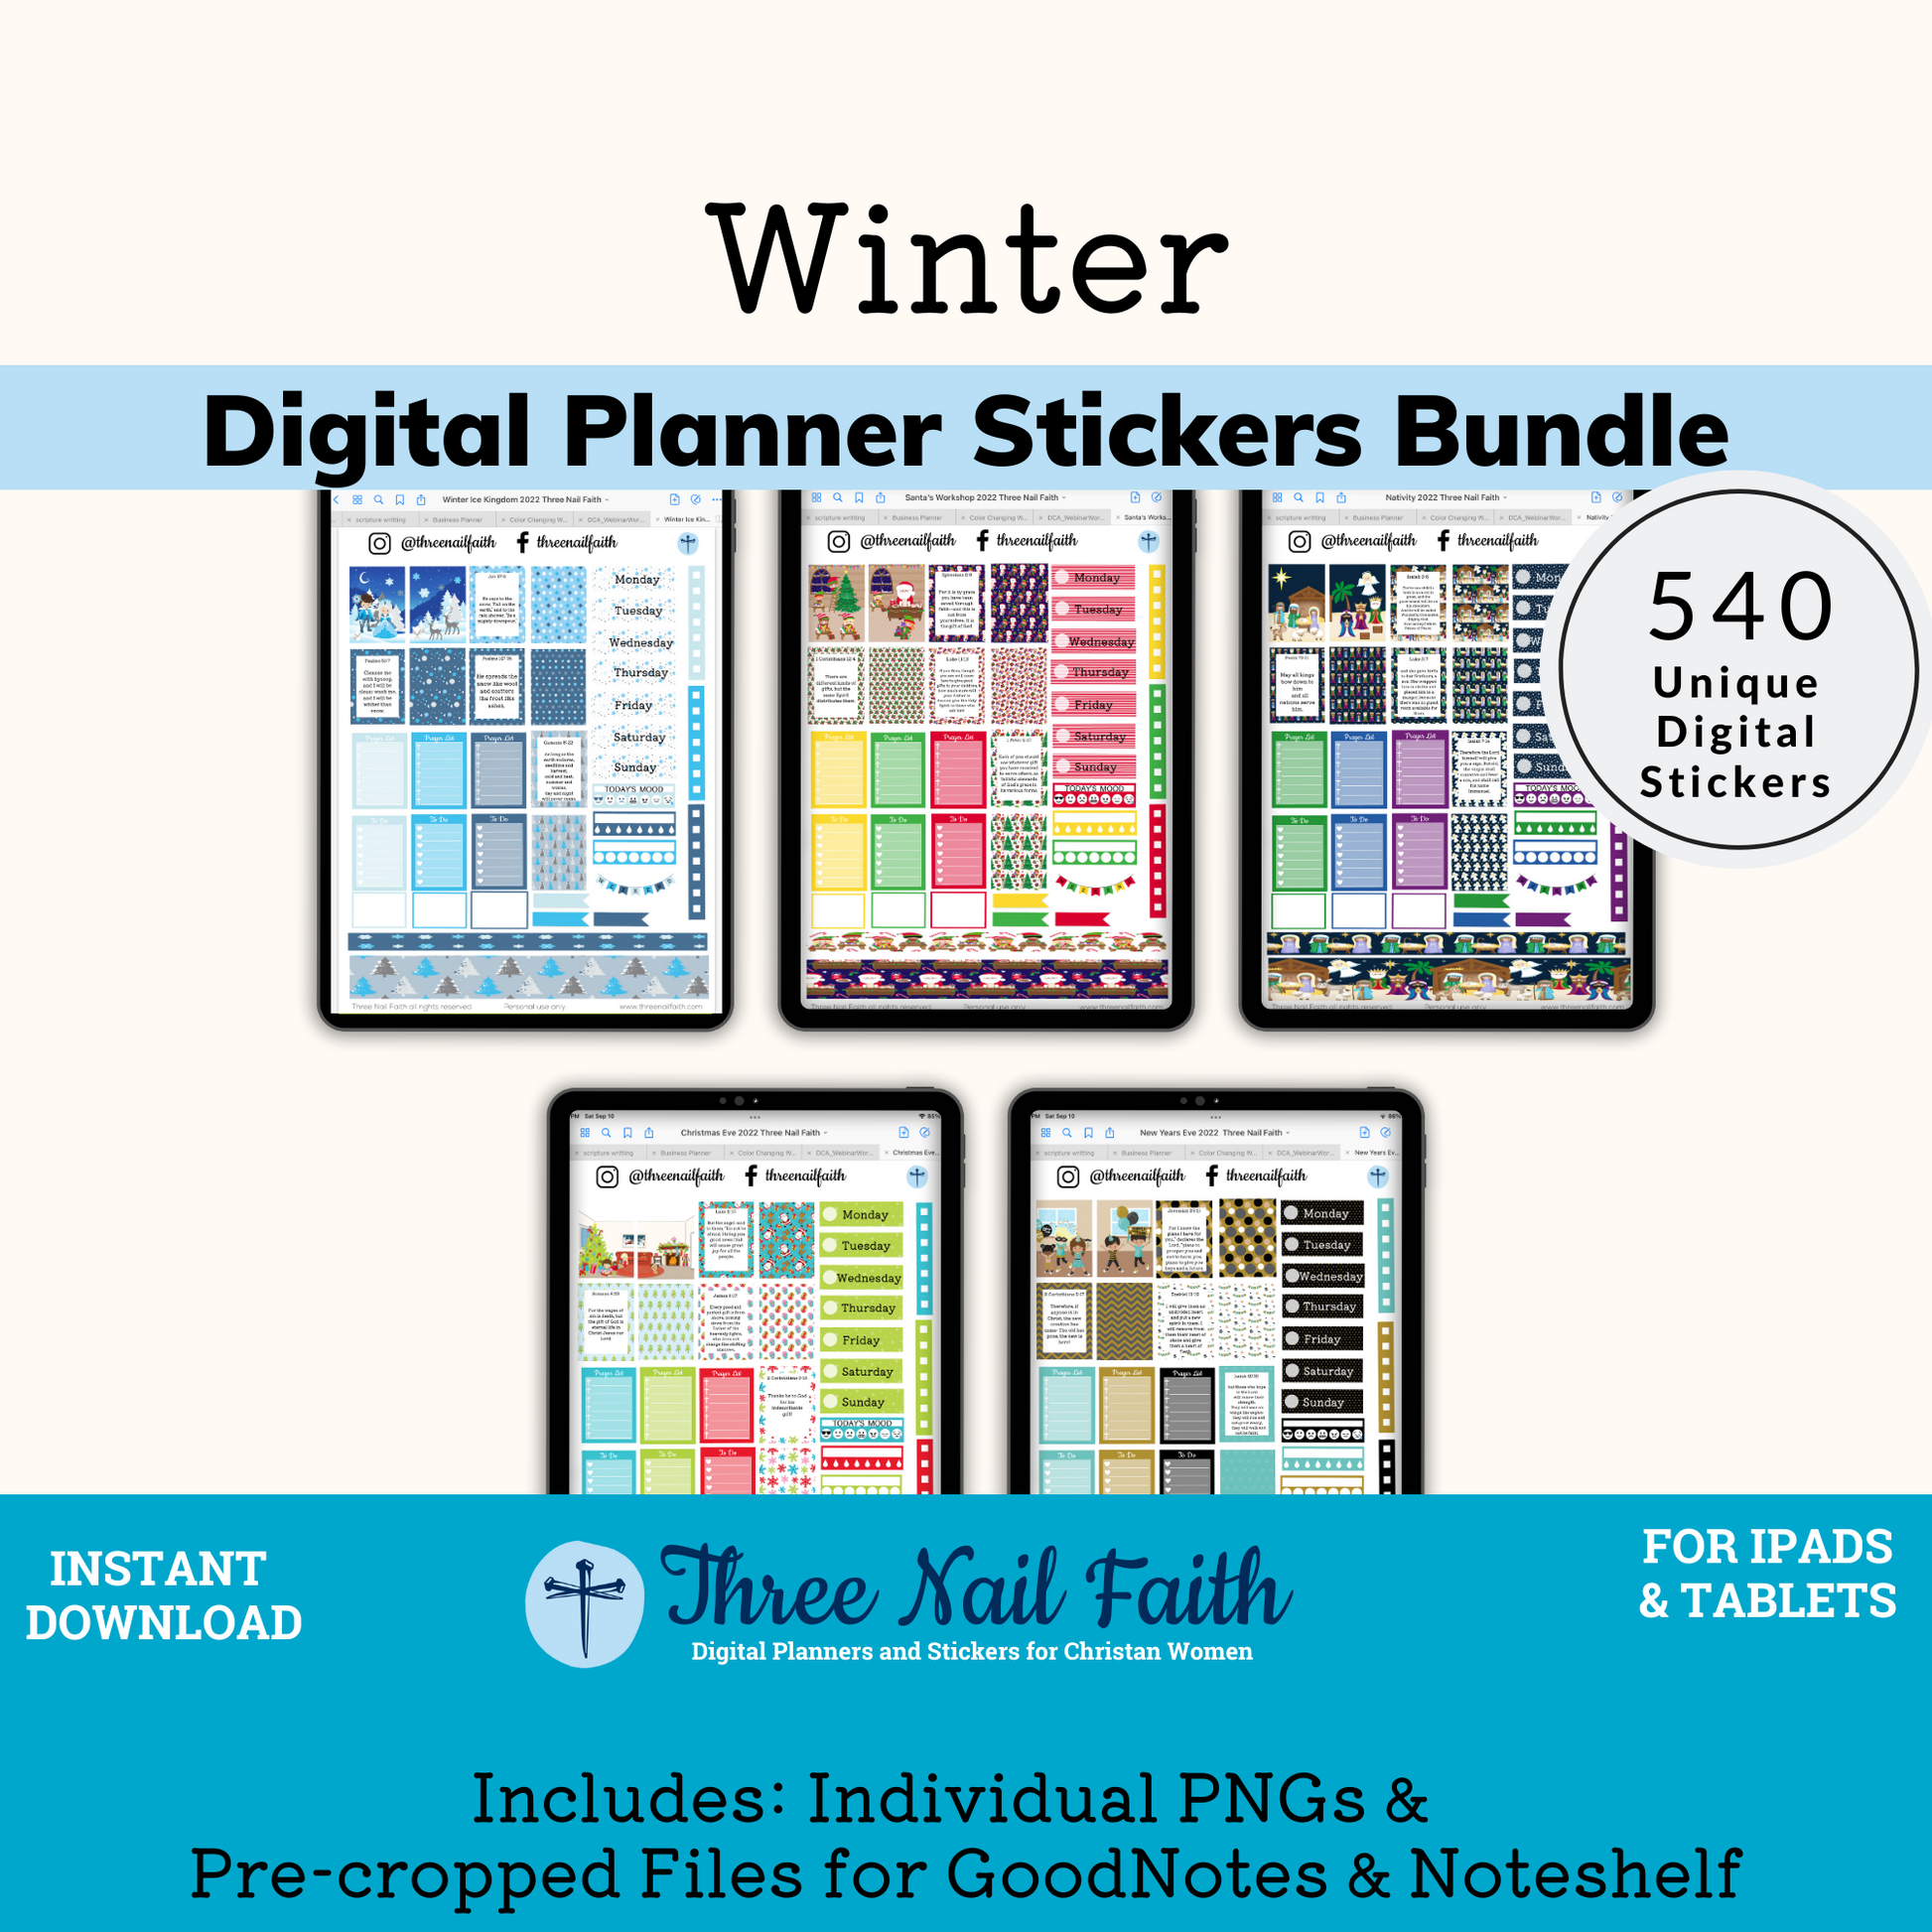 winter digital sticker bundle with 540 Digital stickers